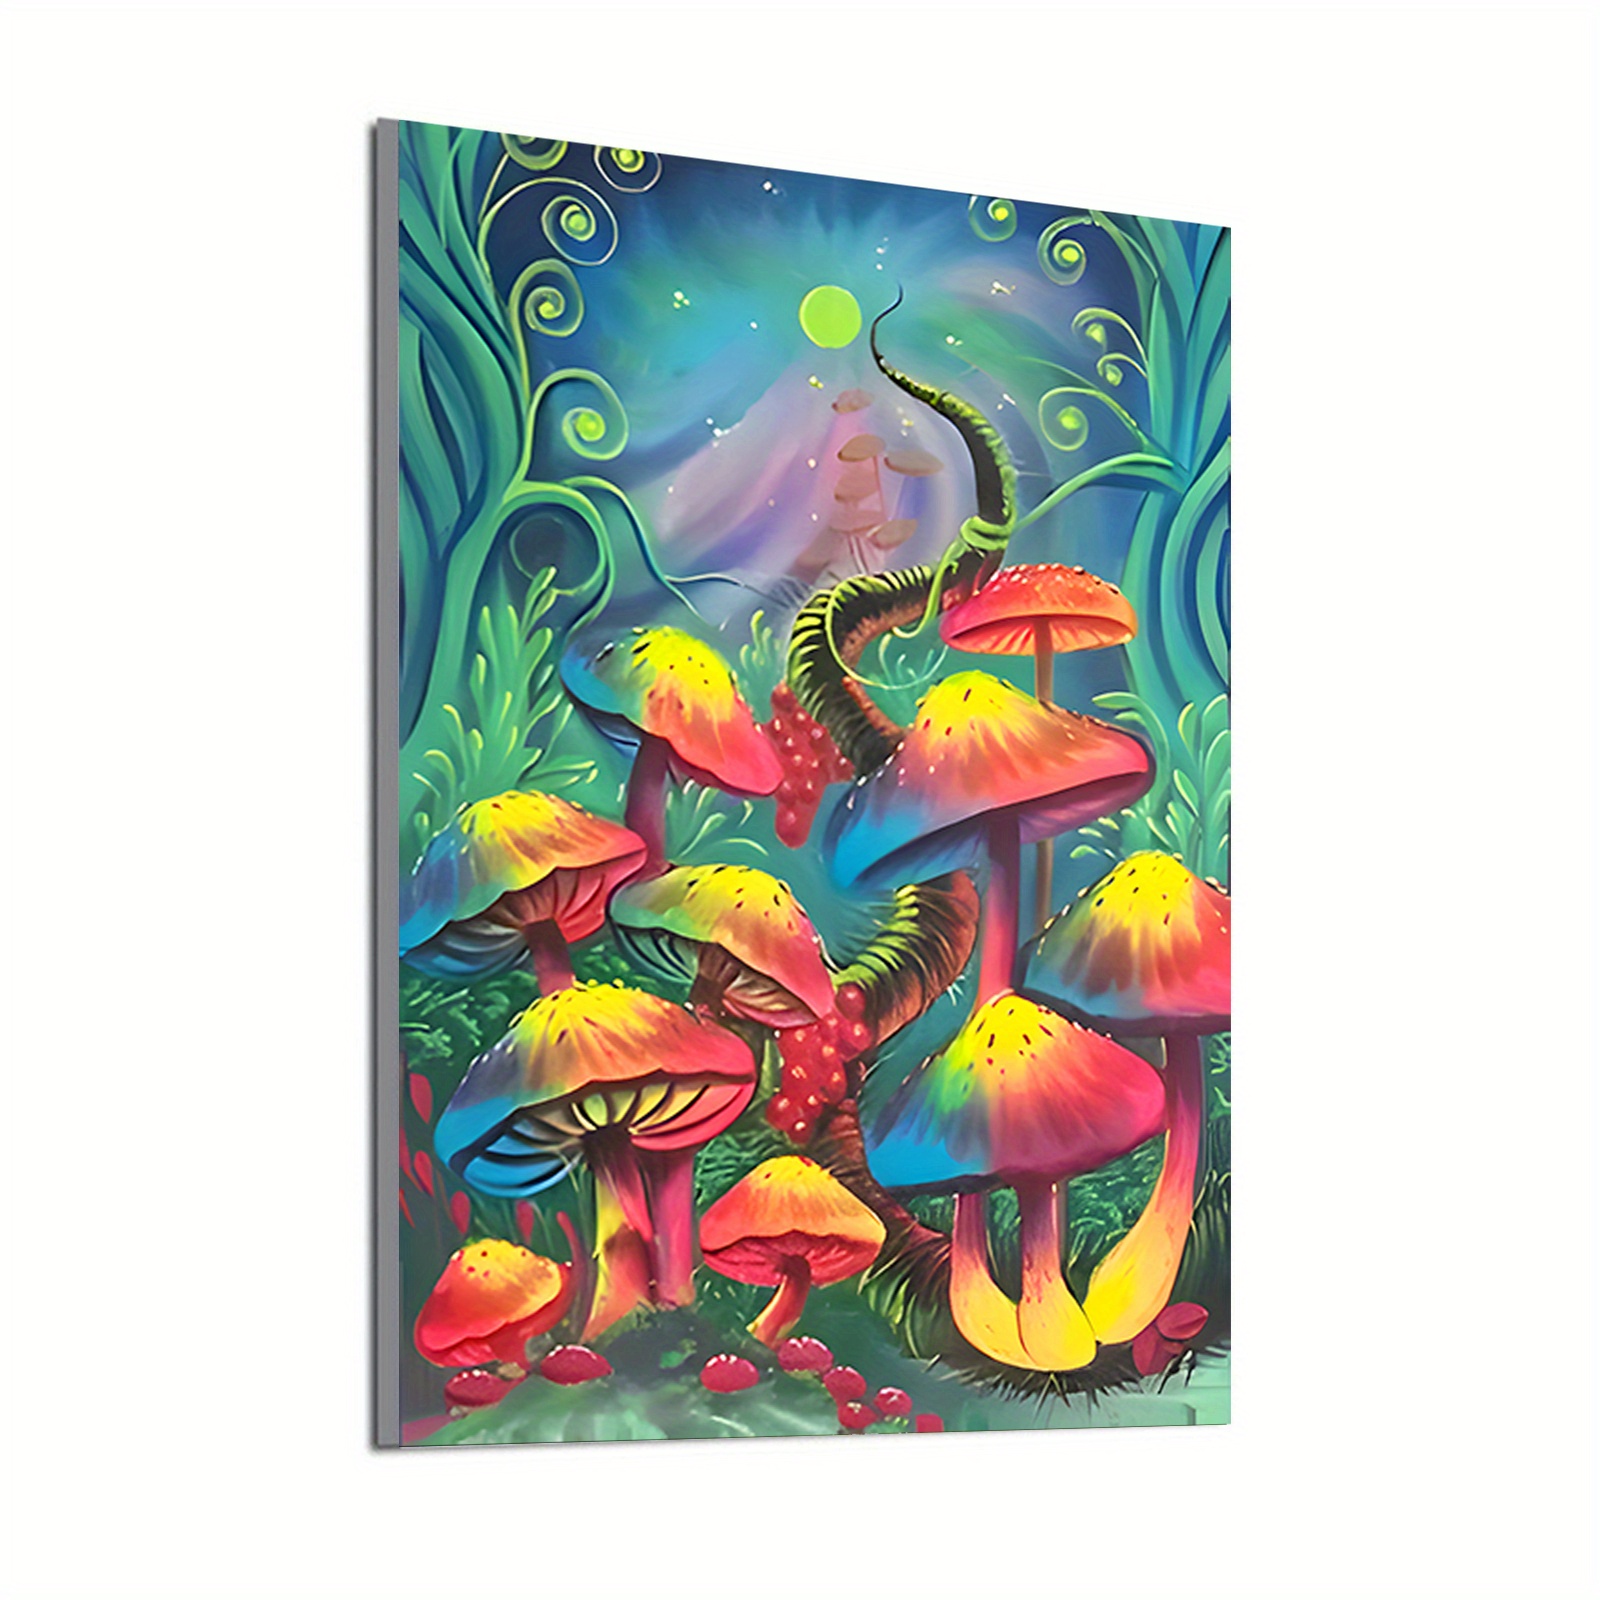 Mushroom - Full Round - Diamond Painting (30*40cm)